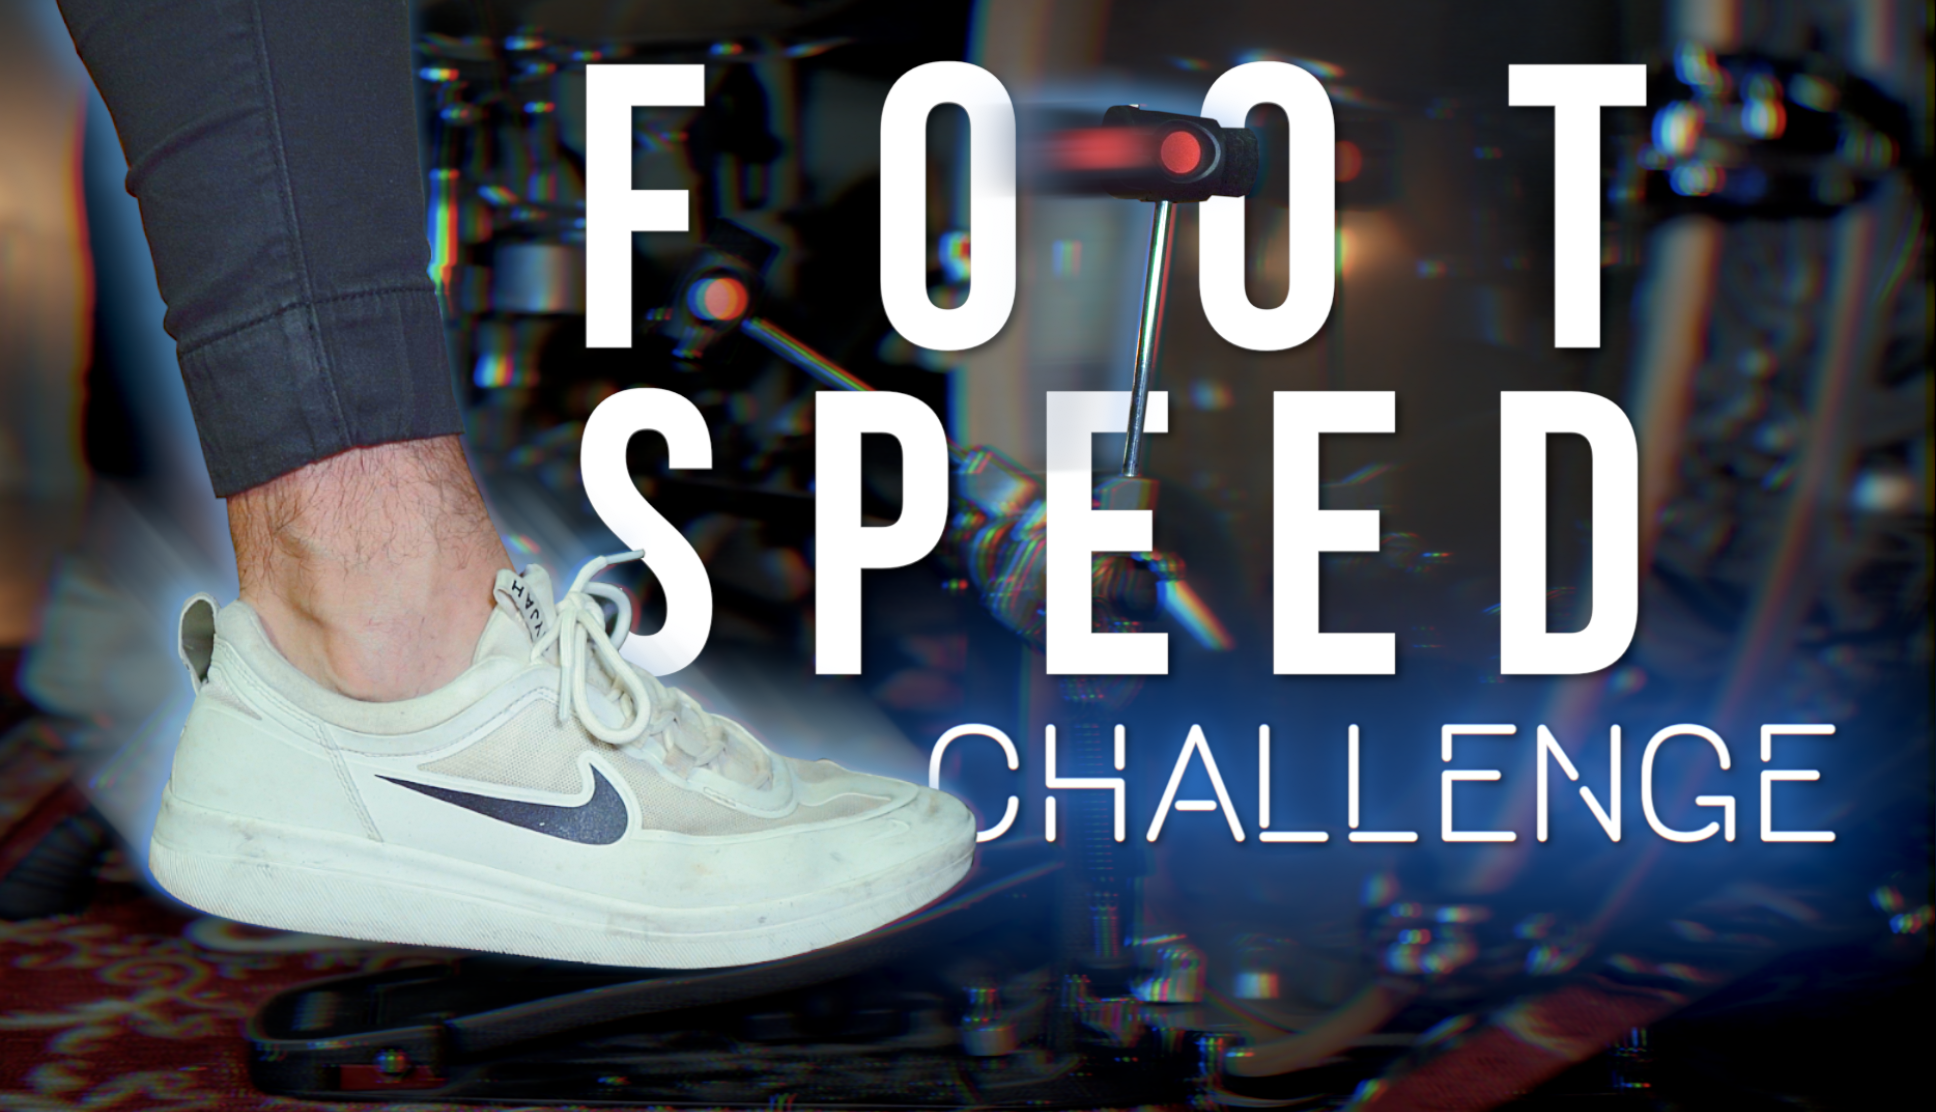 The Foot Speed Challenge